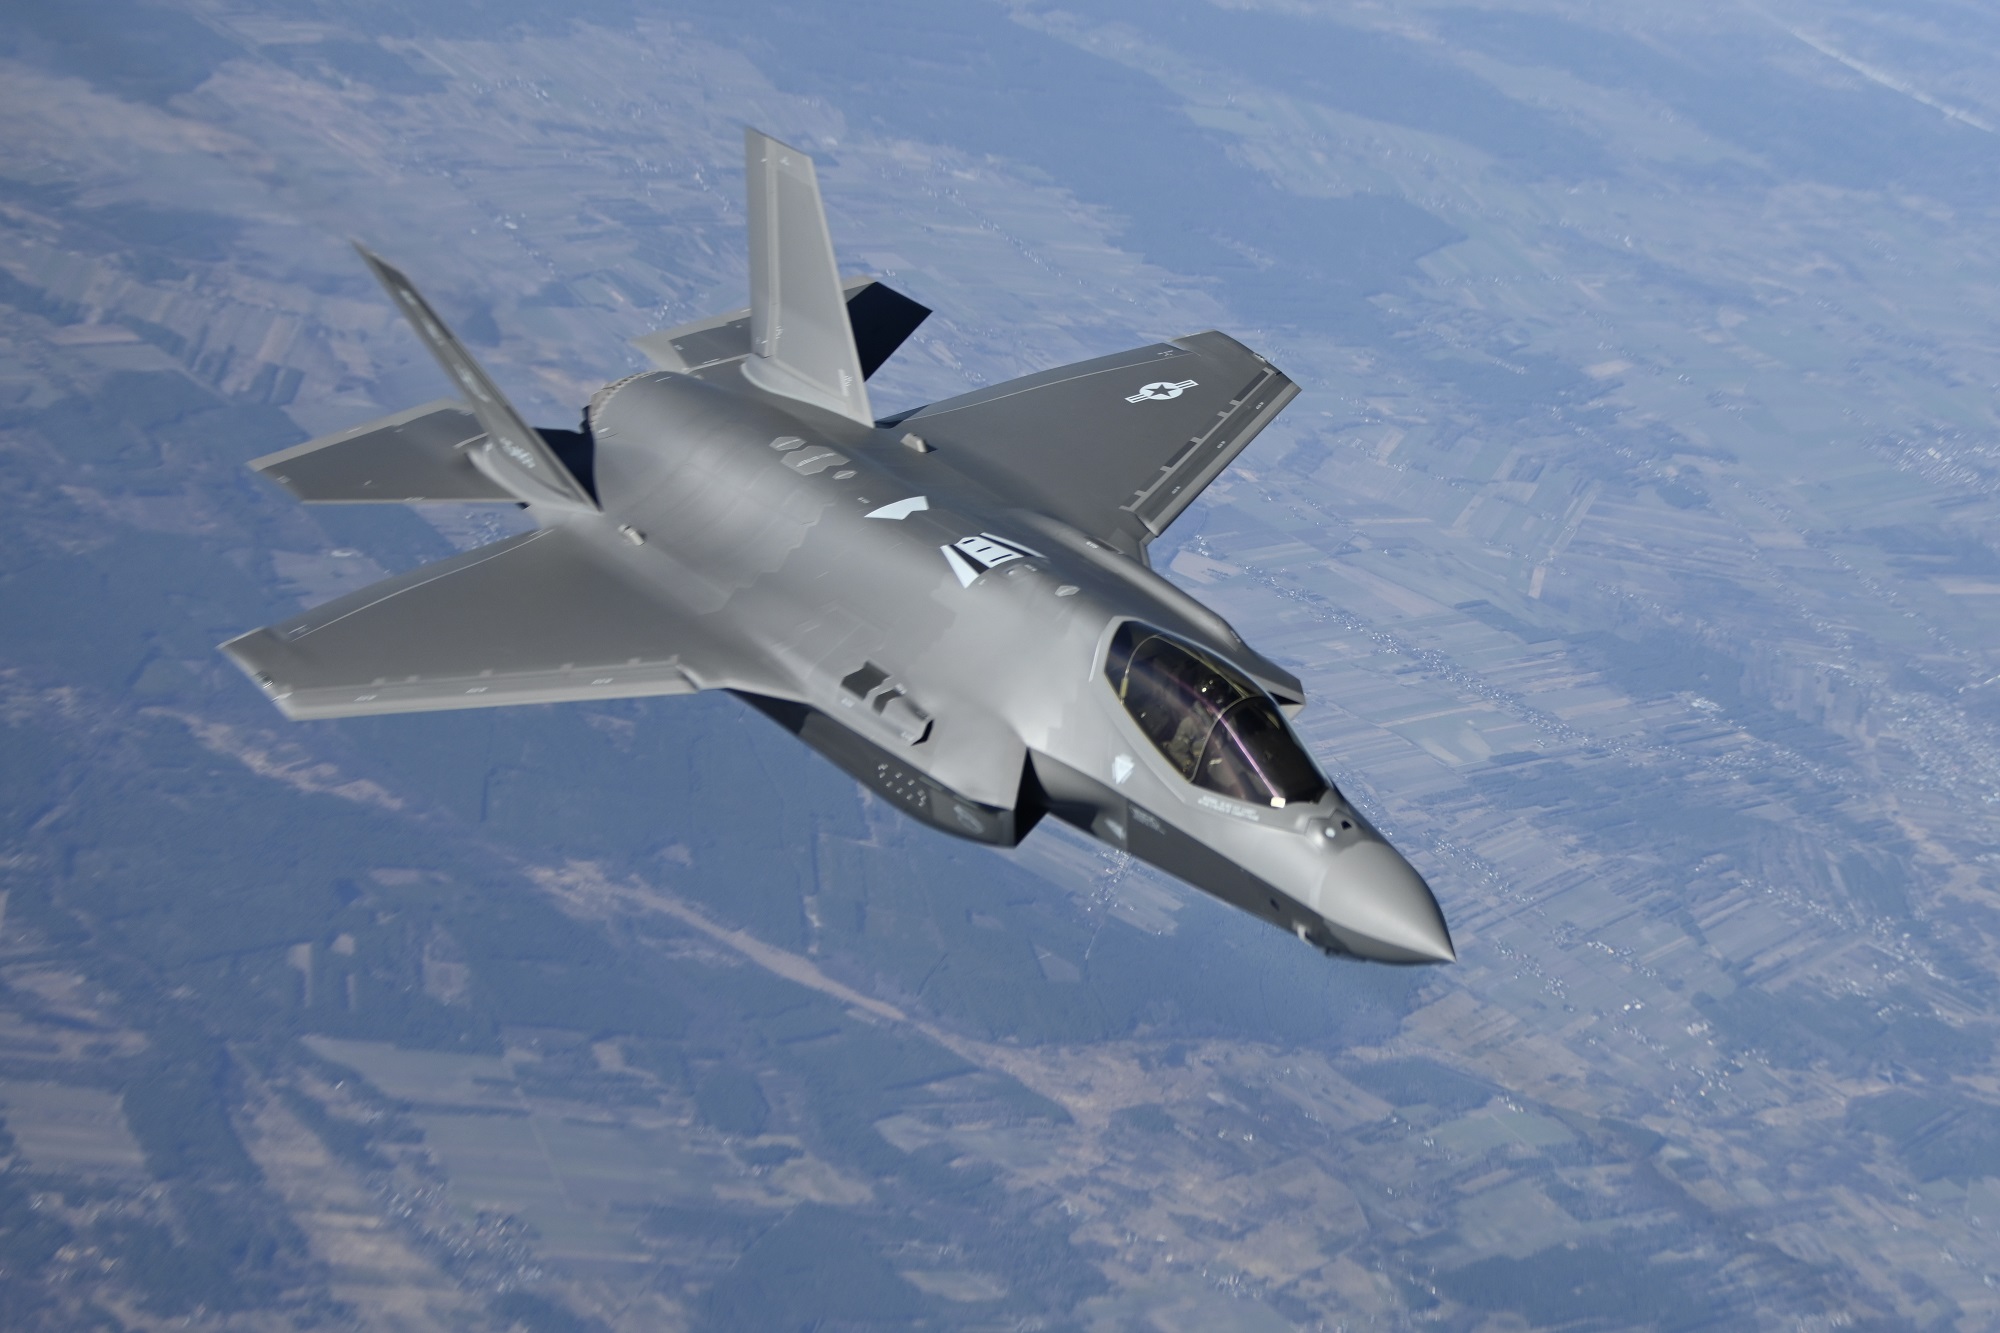 A. Στεφανής: Το “αόρατο” πολεμικό αεροπλάνο F 35 – Άλμα στο μέλλον με το μαχητικό 5ης γενιάς